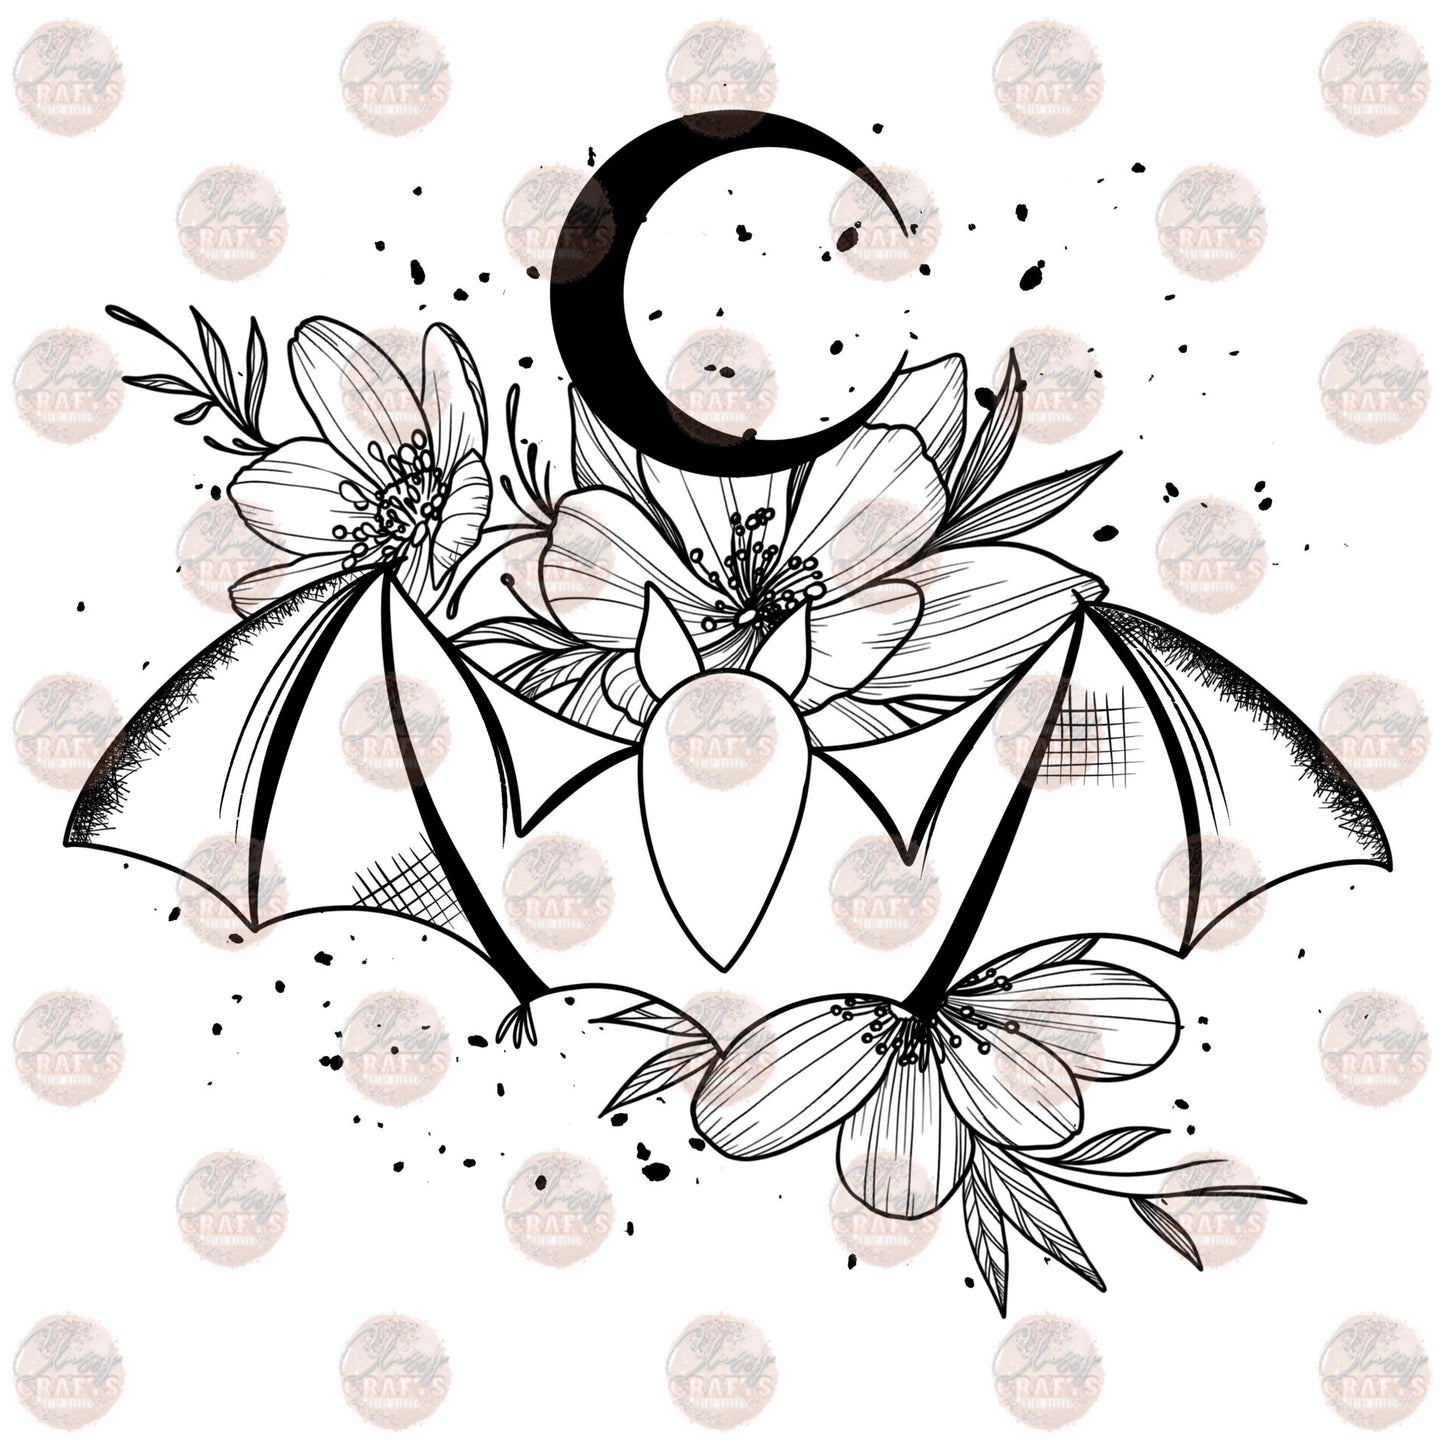 Bat Floral B&W Transfer